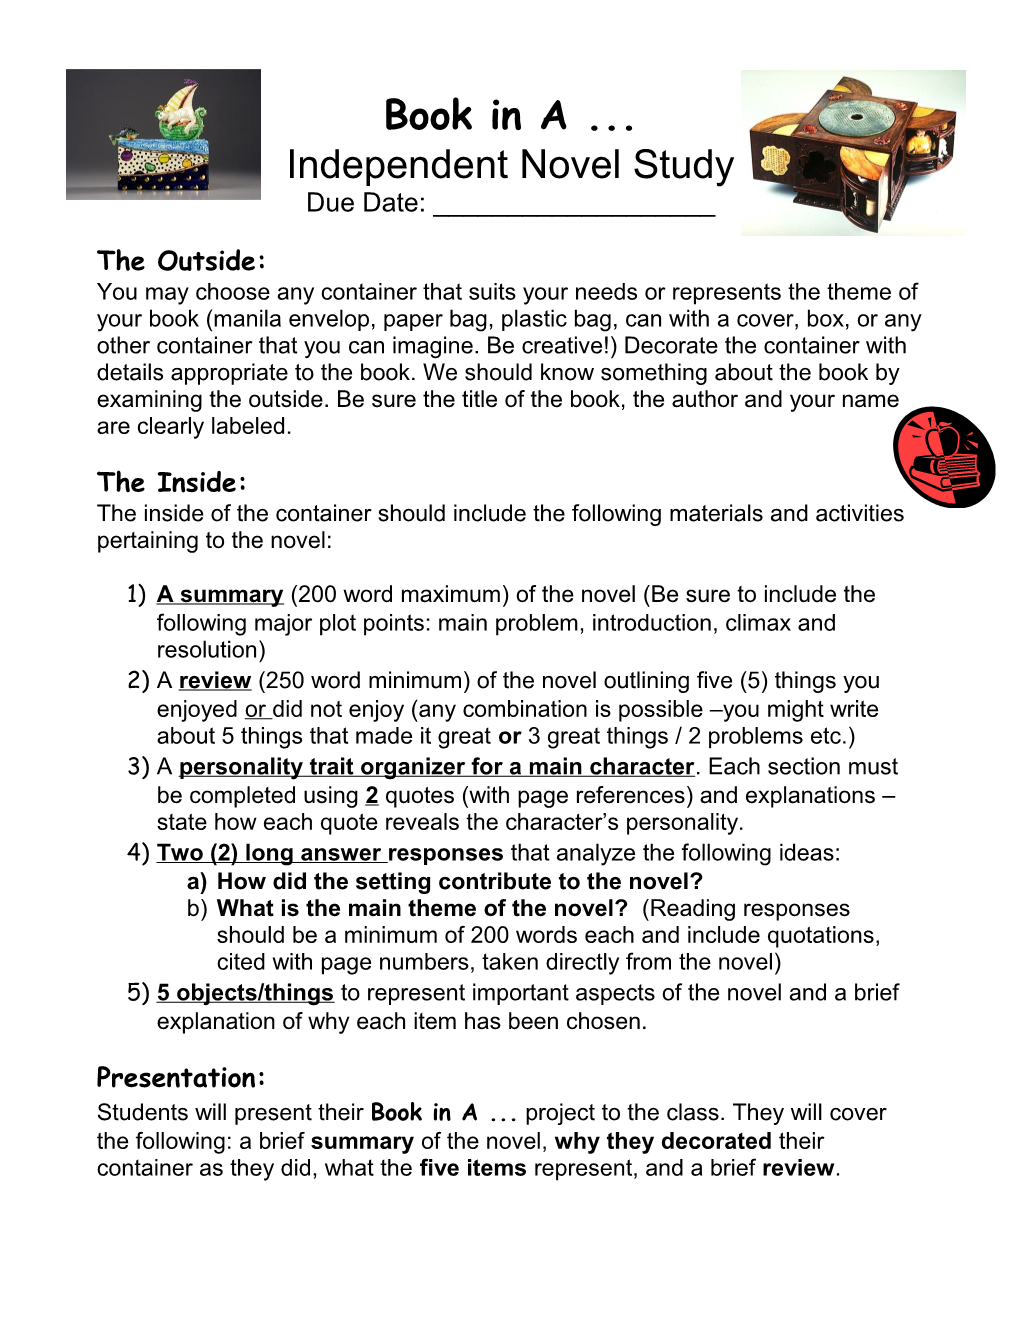 Independent Novel Study